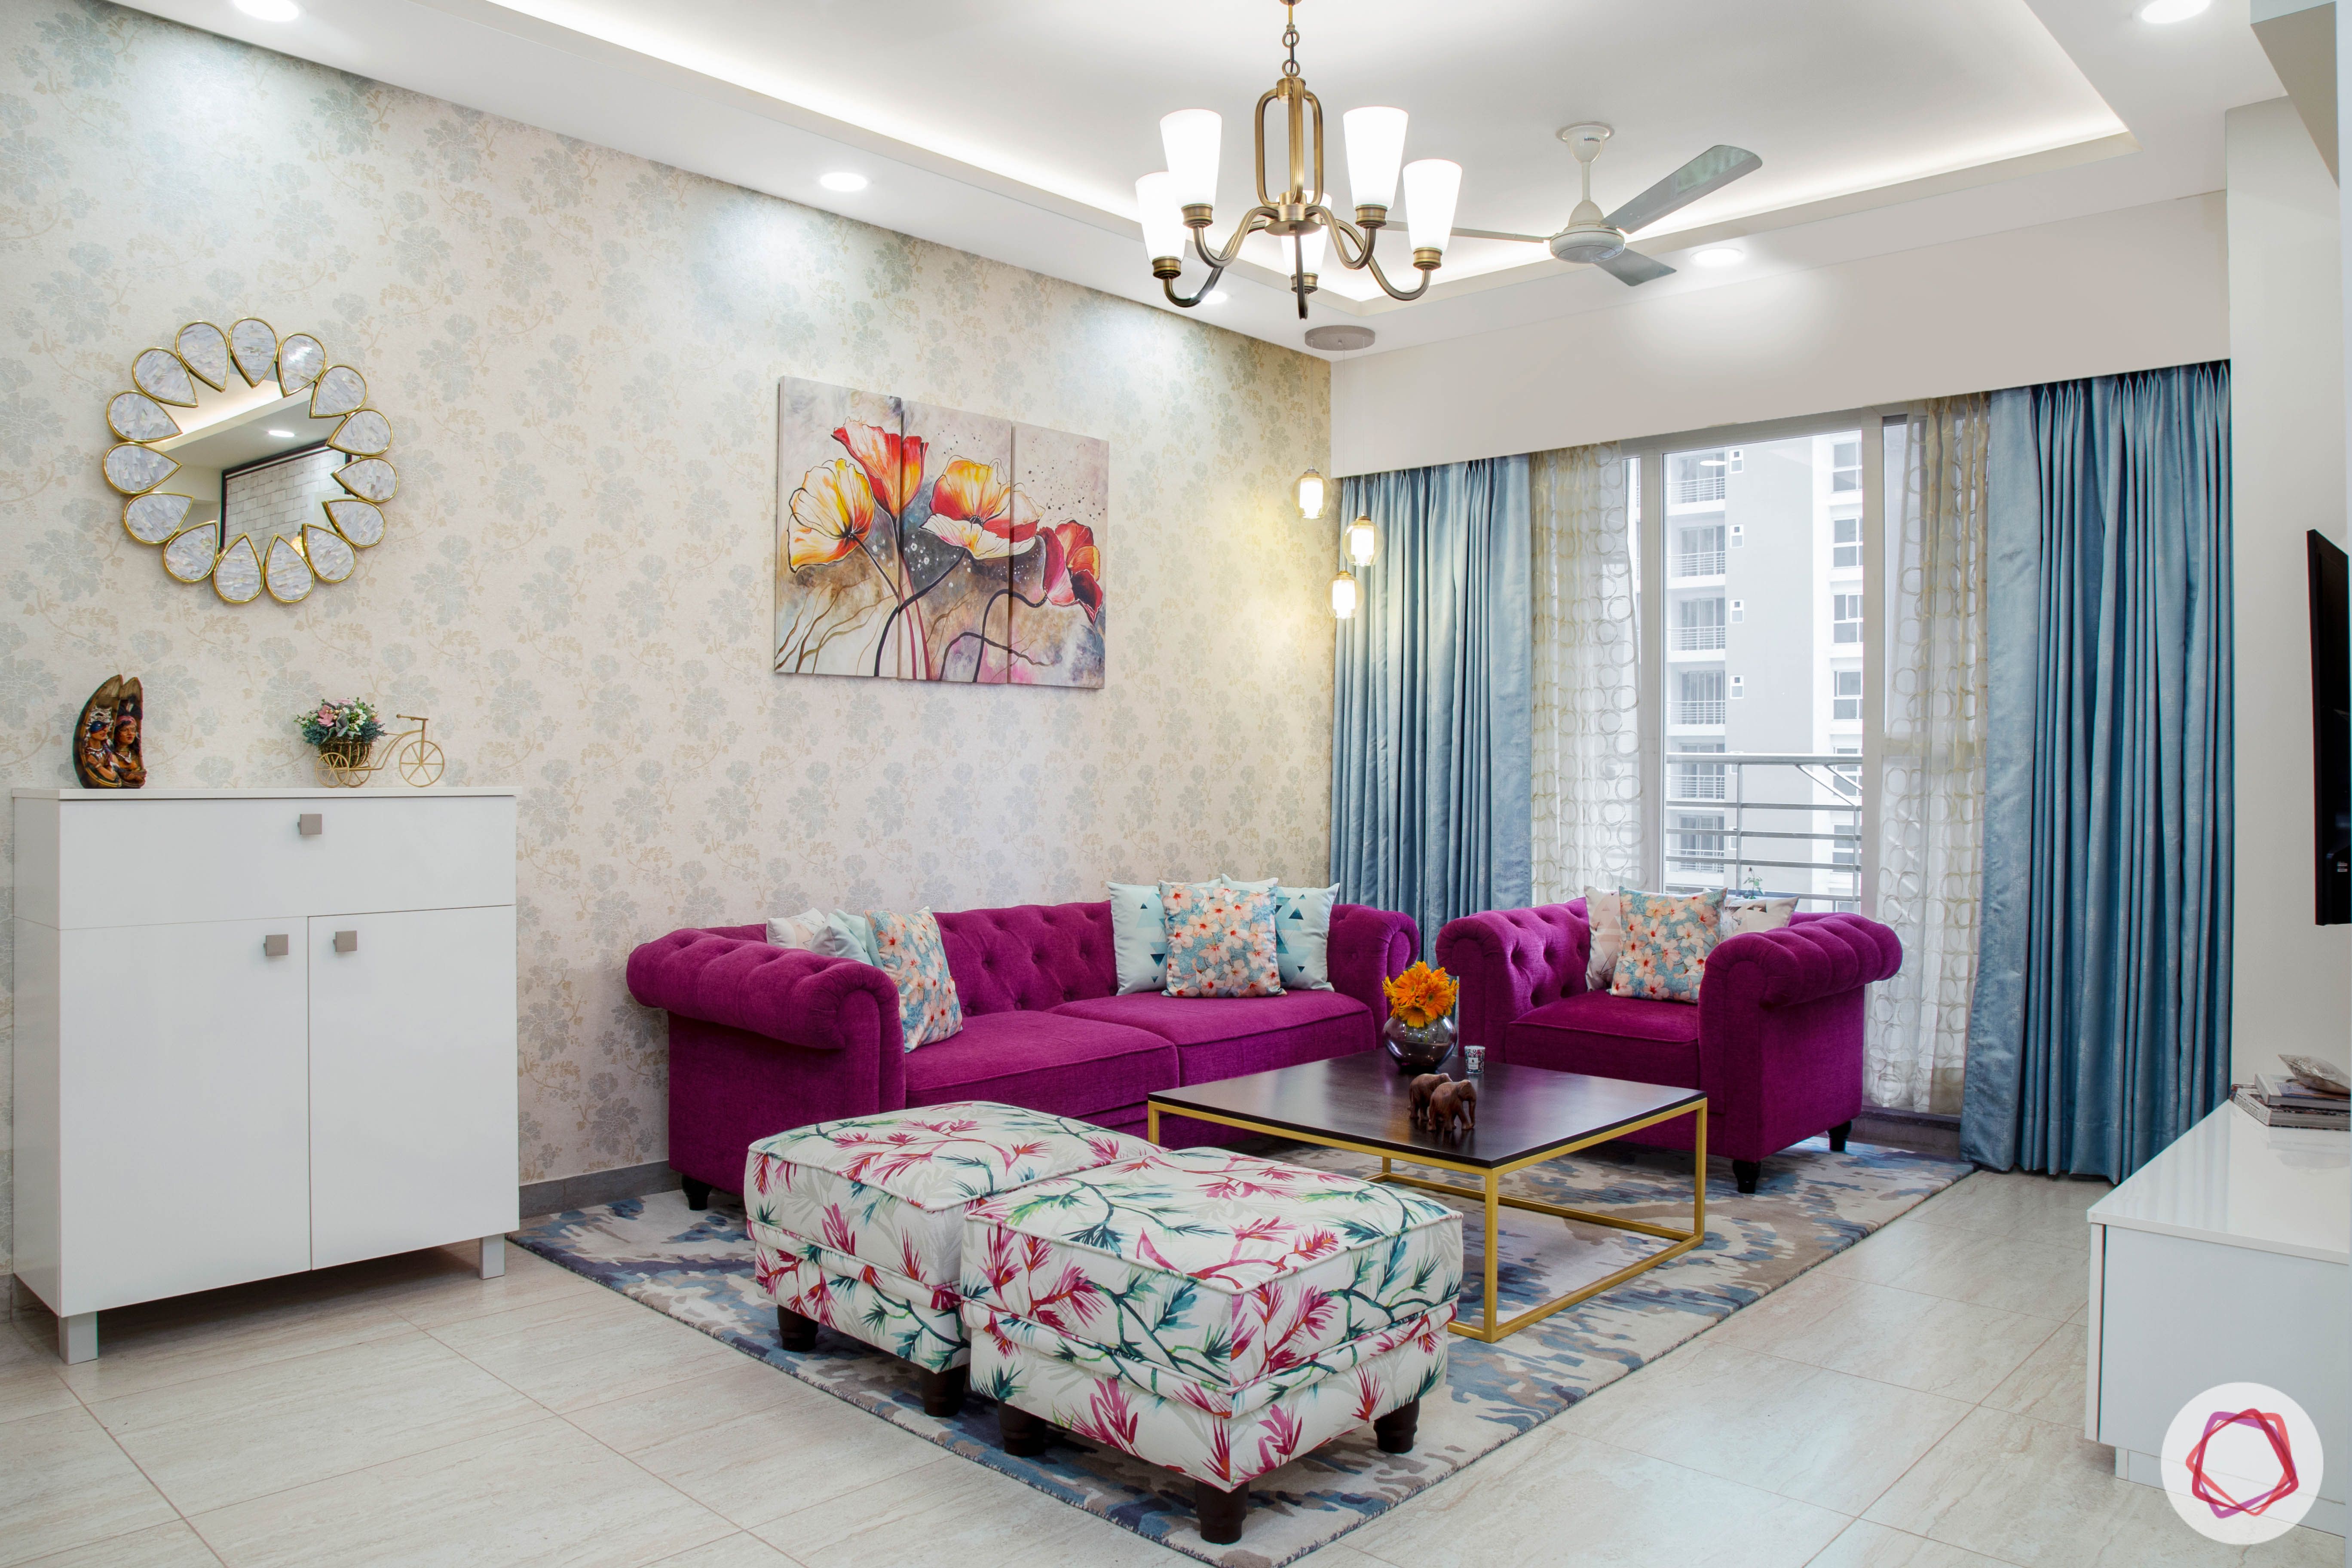 sofa colour-purple sofa designs-floral print ottoman